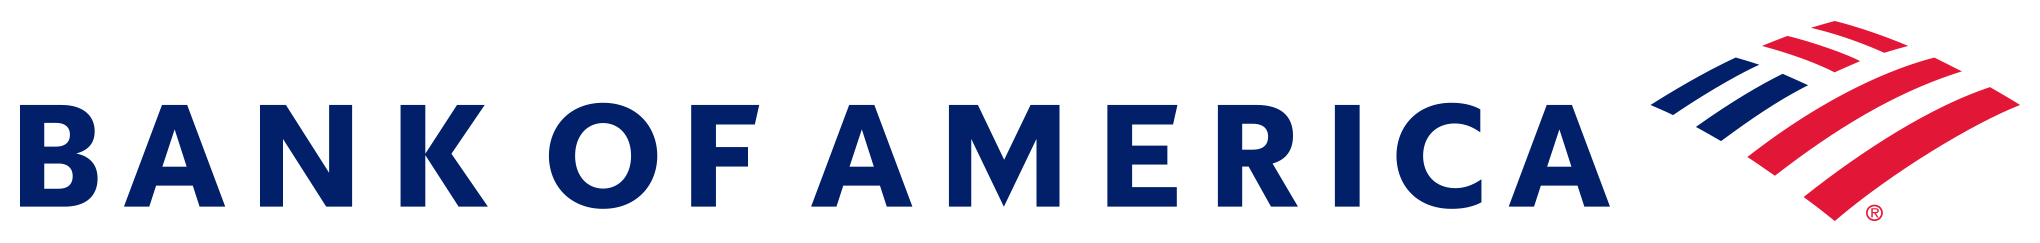 Bank Of America Logo PNG - 178757